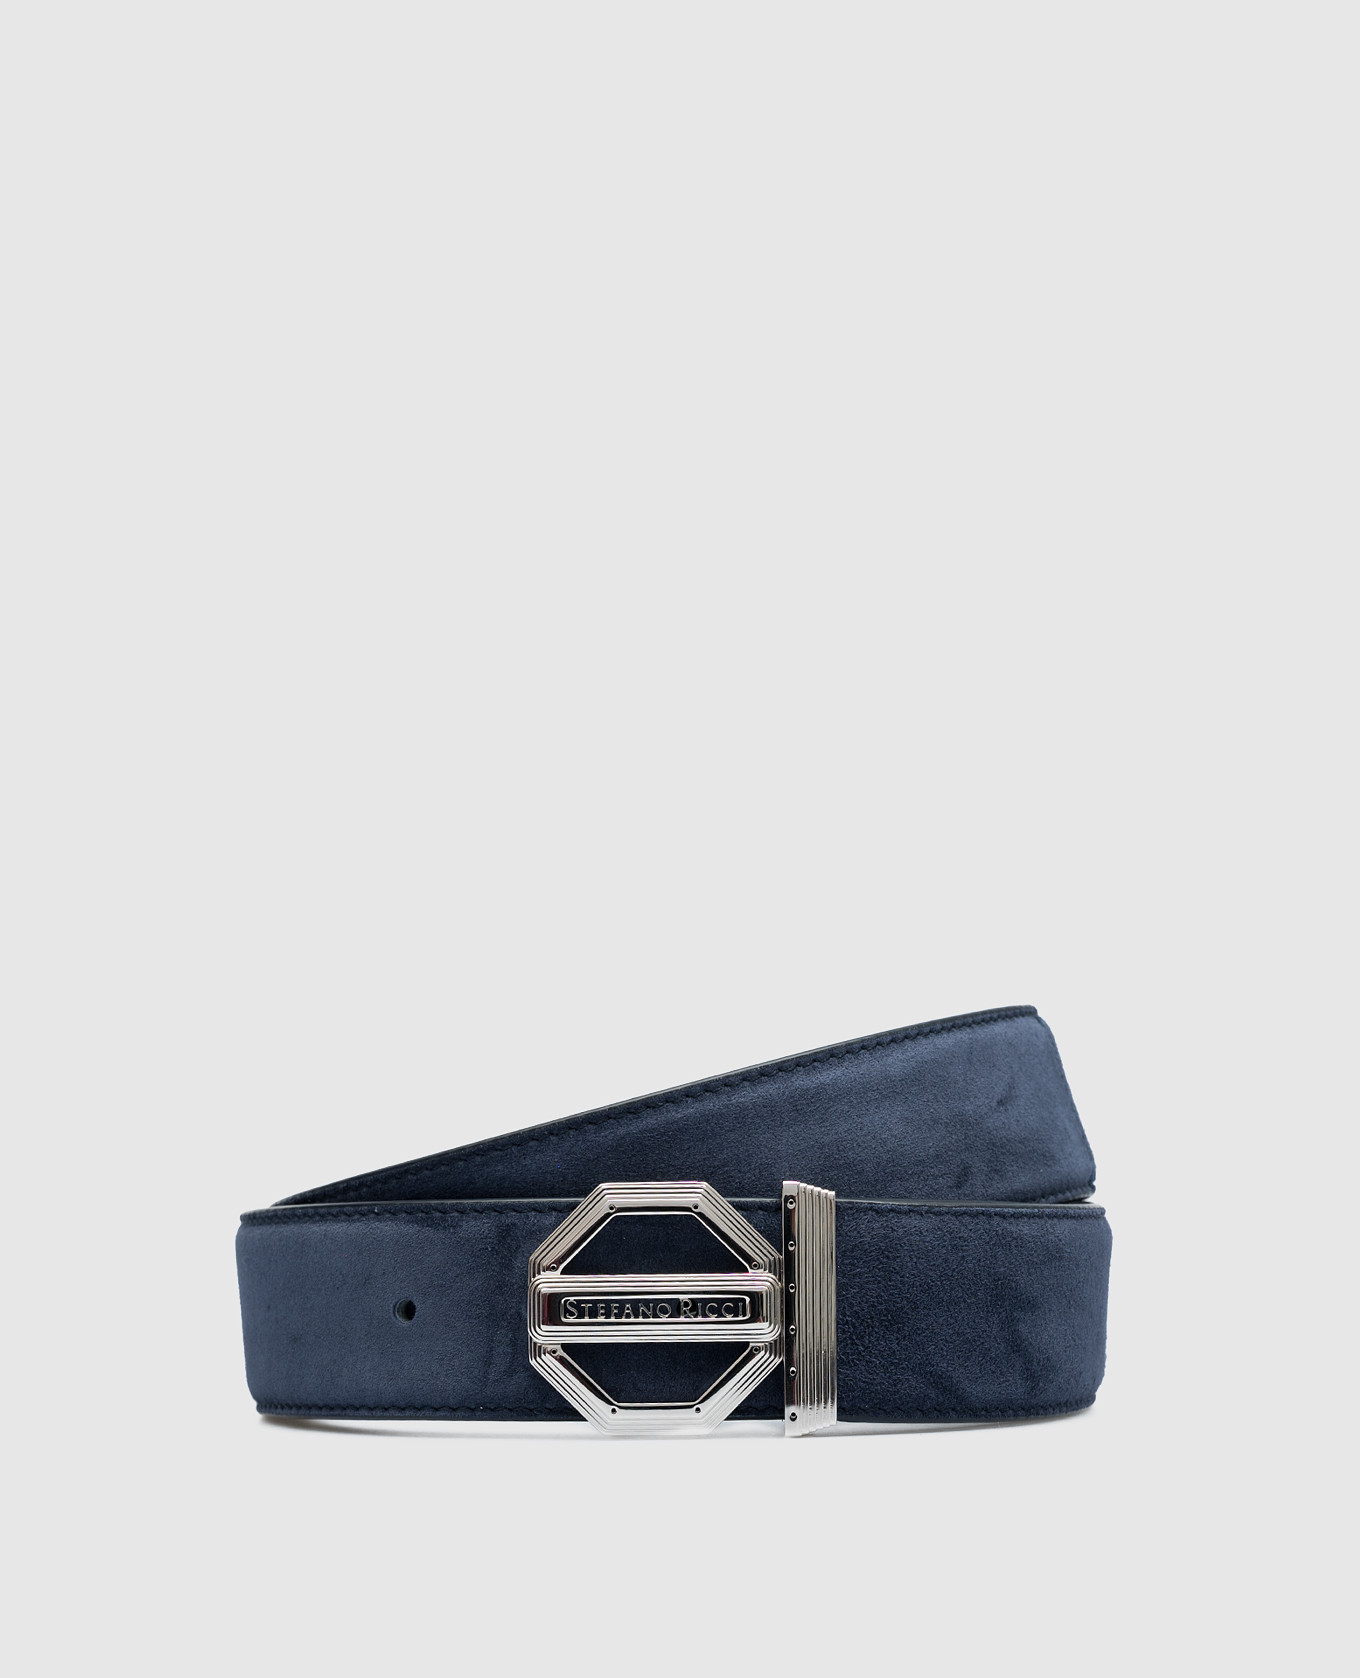 Blue suede belt with logo